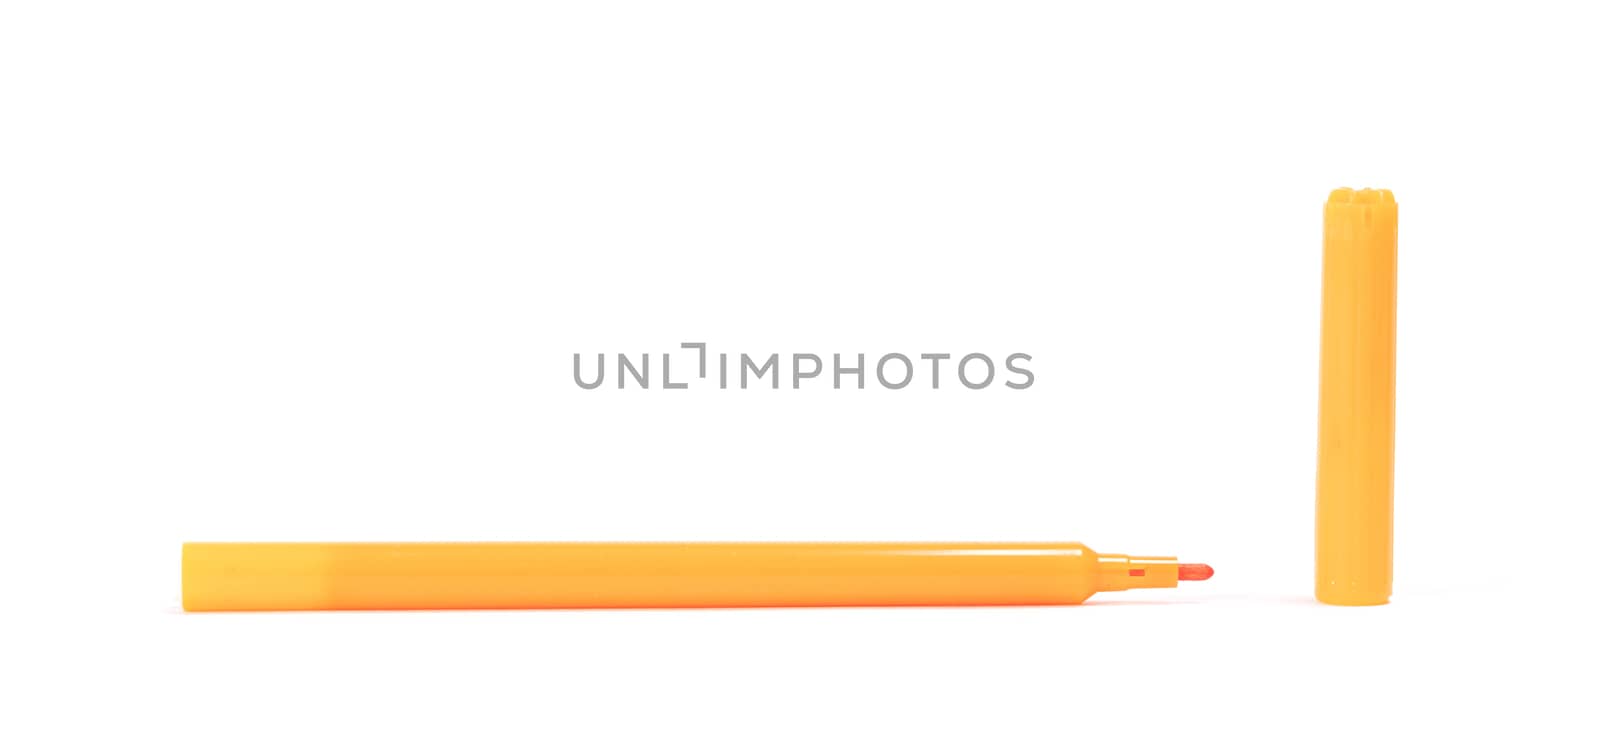 Orange felt-tip pen isolated on white background